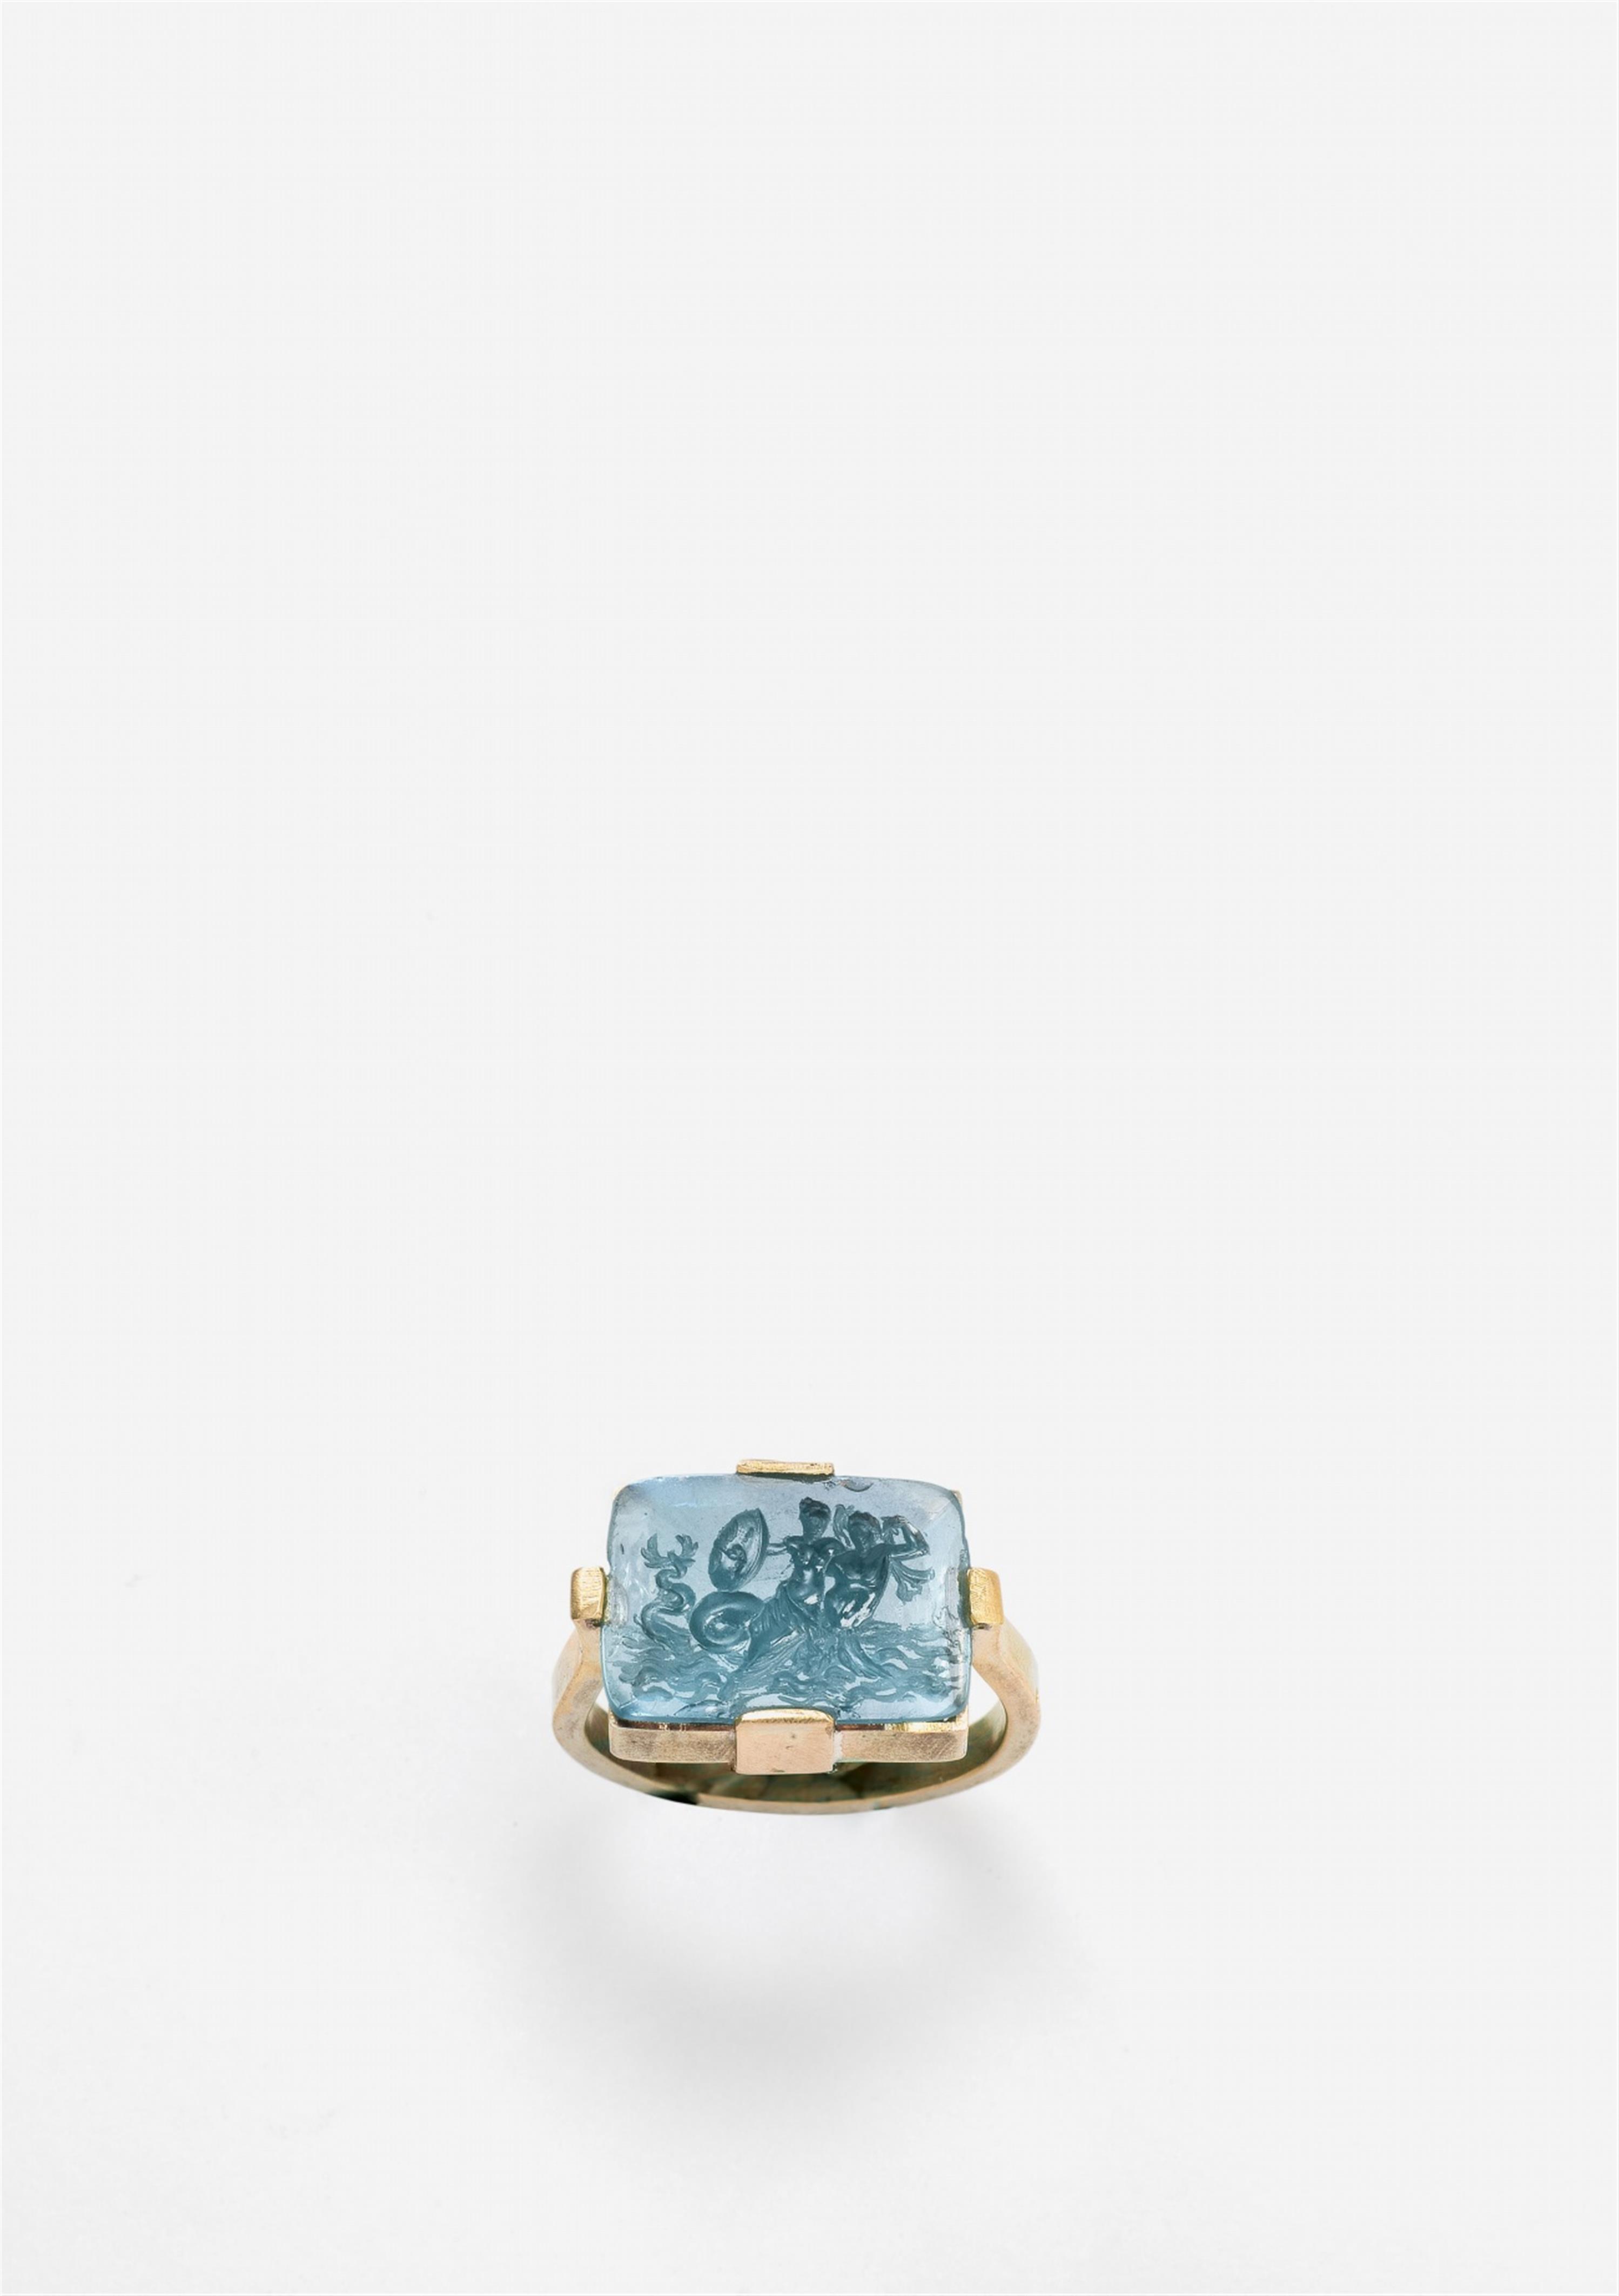 An 18k white gold and aquamarine intaglio ring - image-2